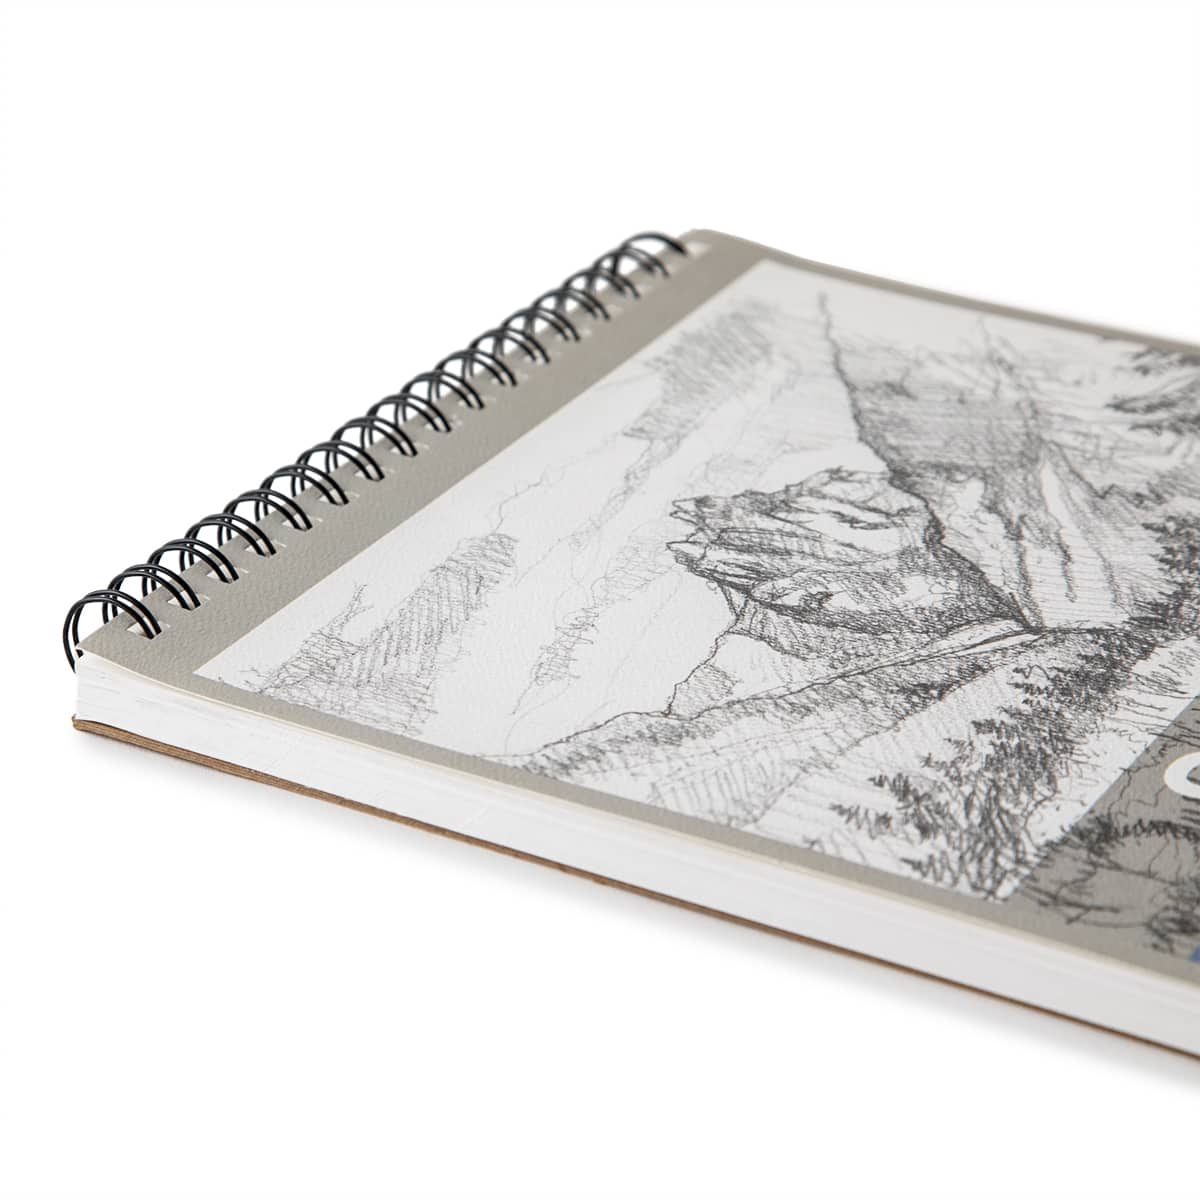 Sketchbook by Artist's Loft™, 4 x 4, Michaels